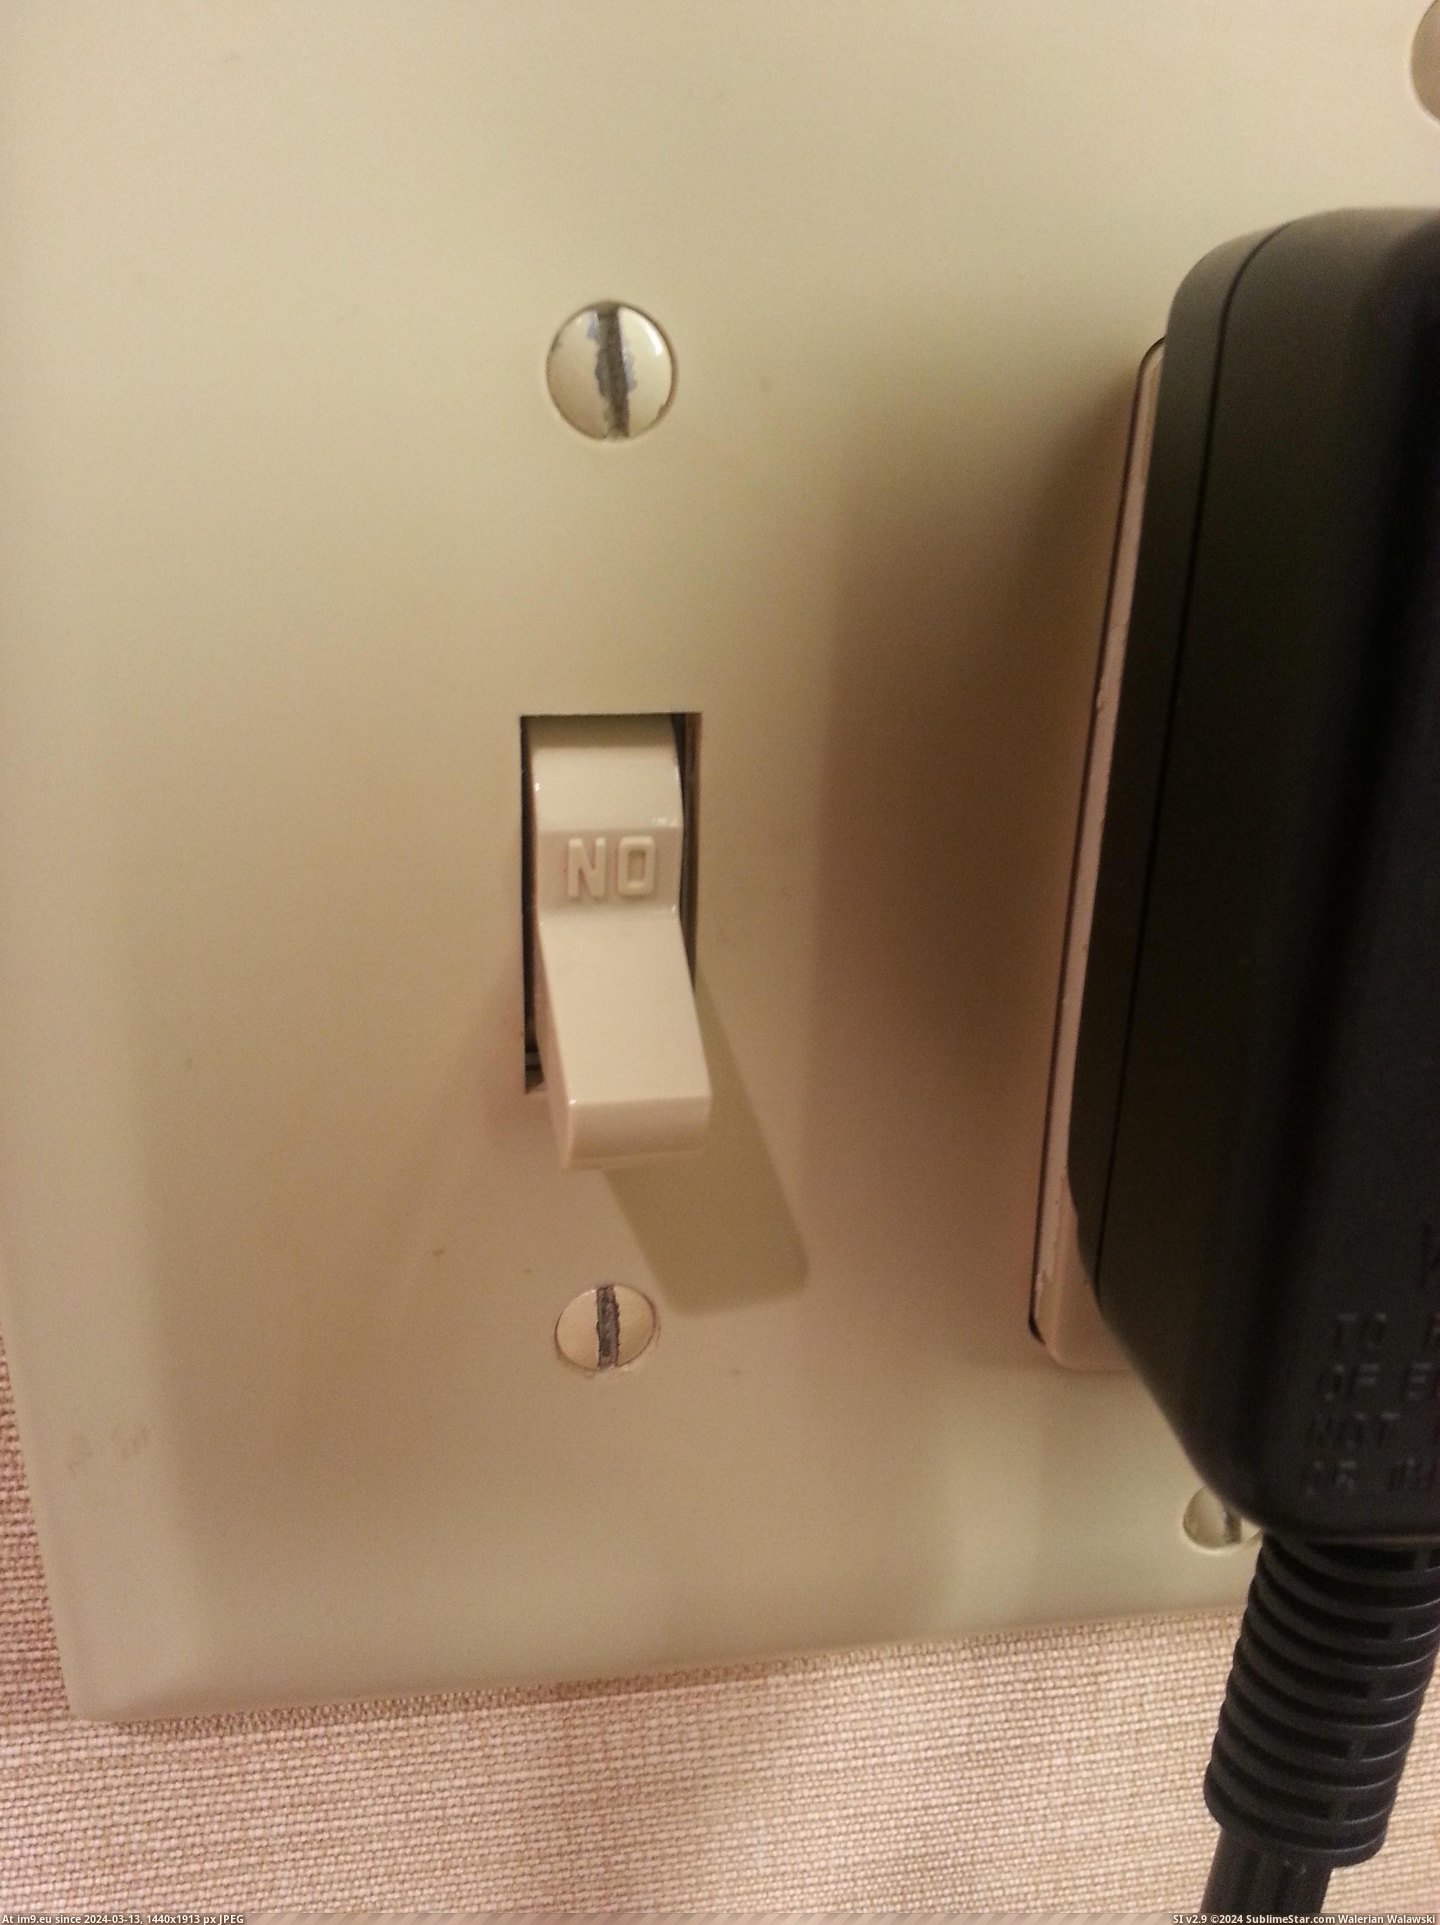 #Hotel #Switch #Upside #Light [Mildlyinteresting] This hotel light switch is upside down. Pic. (Obraz z album My r/MILDLYINTERESTING favs))